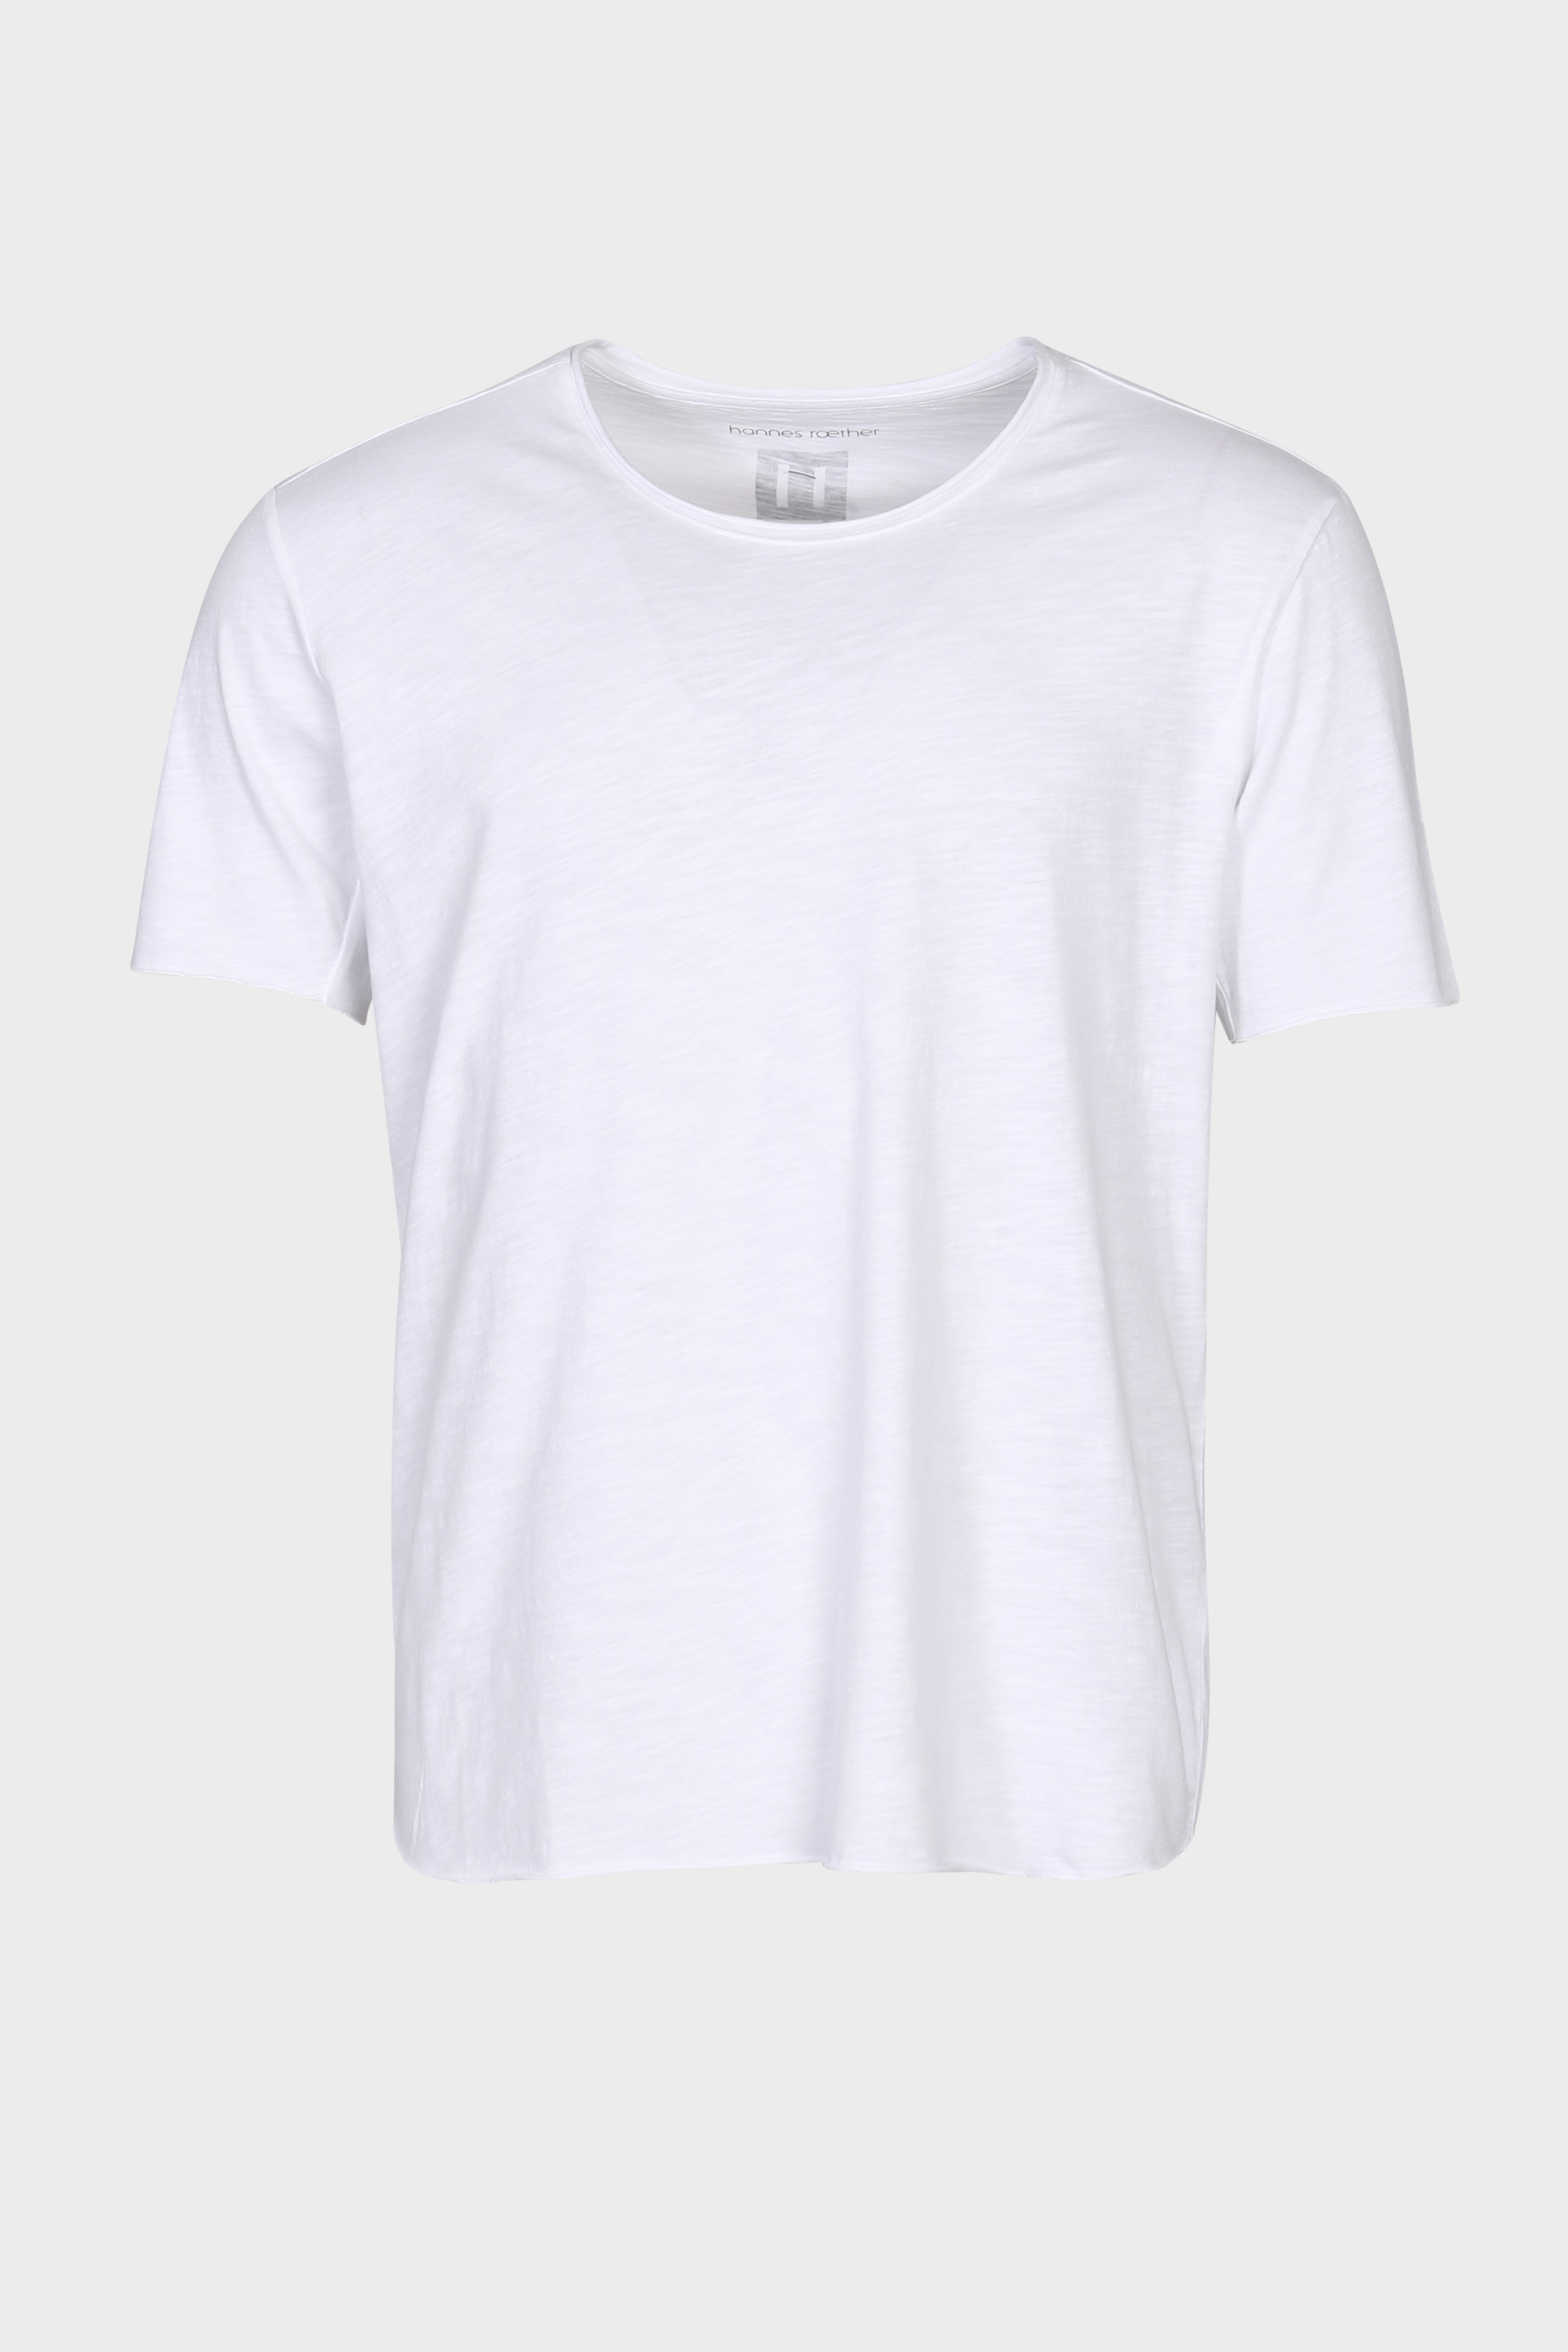 HANNES ROETHER Slub Yersey T-Shirt in White